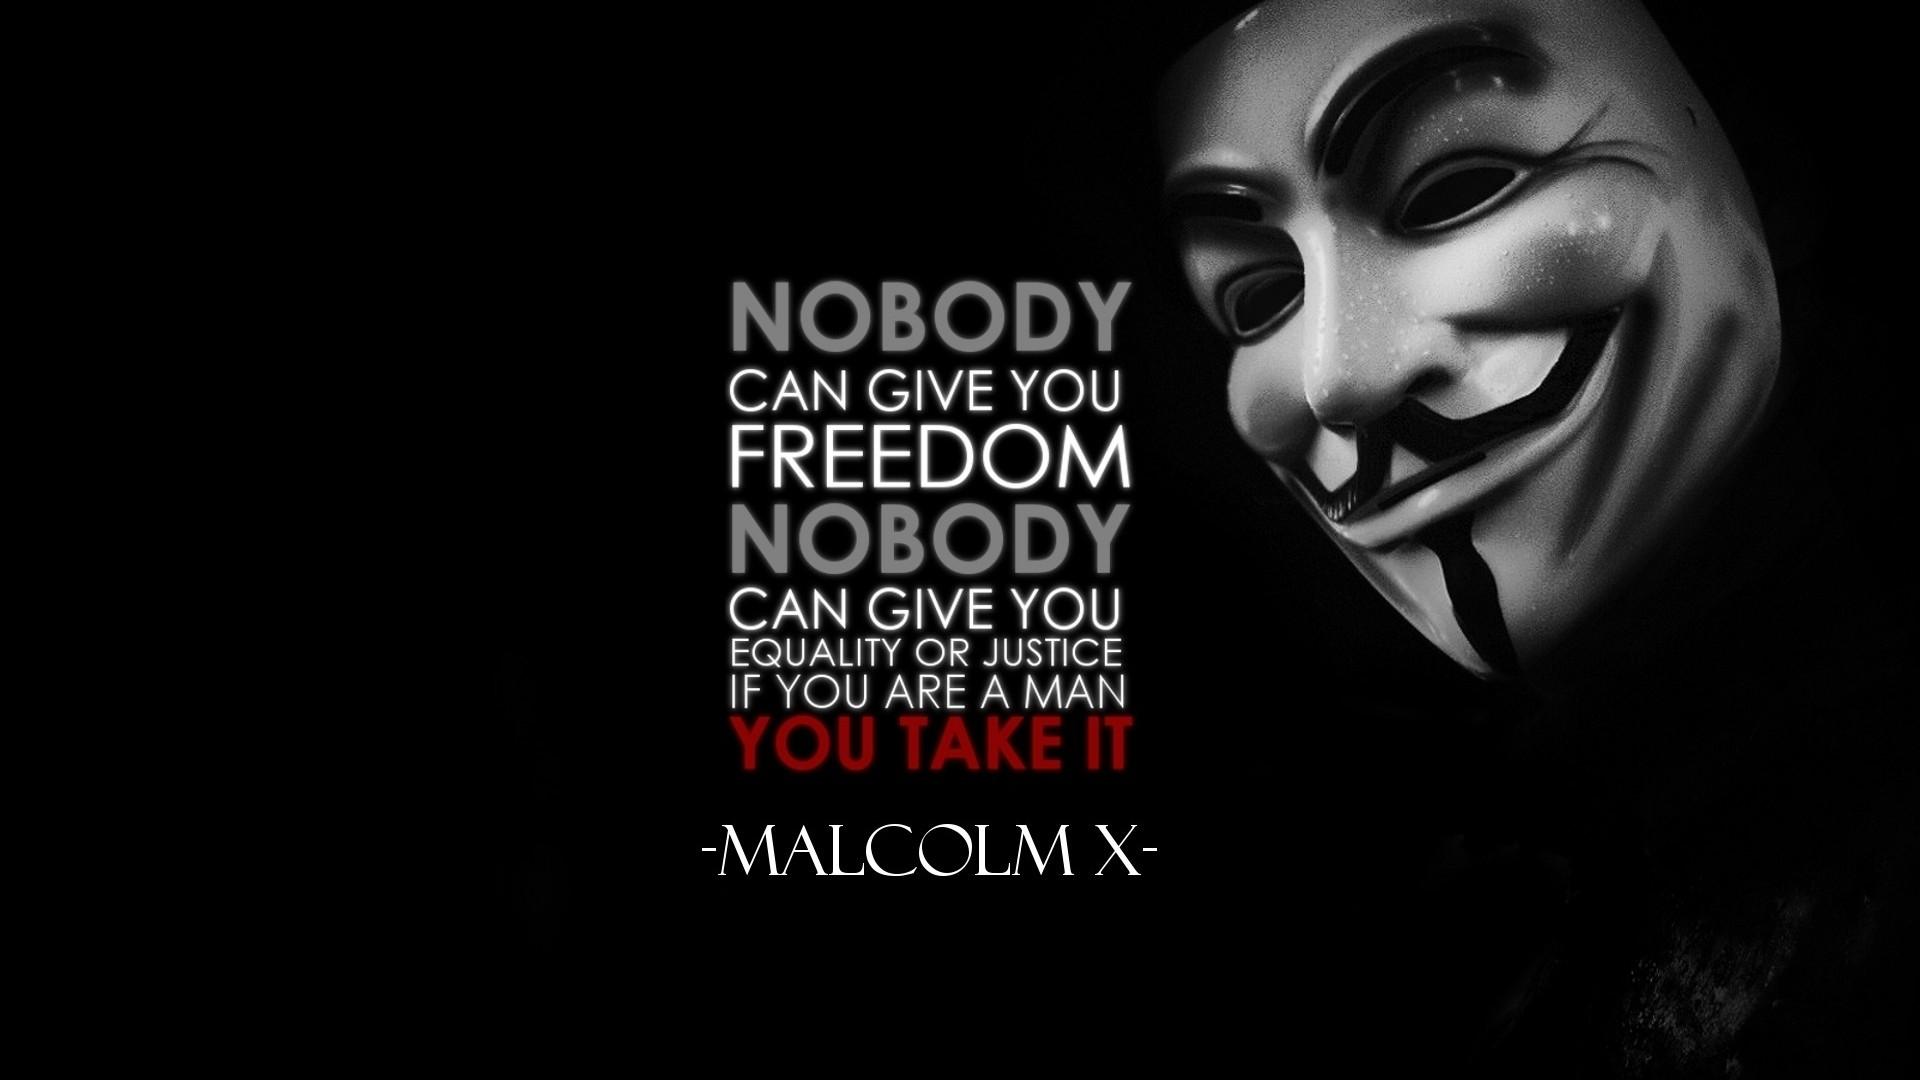 Anonymous Mask Wallpaper